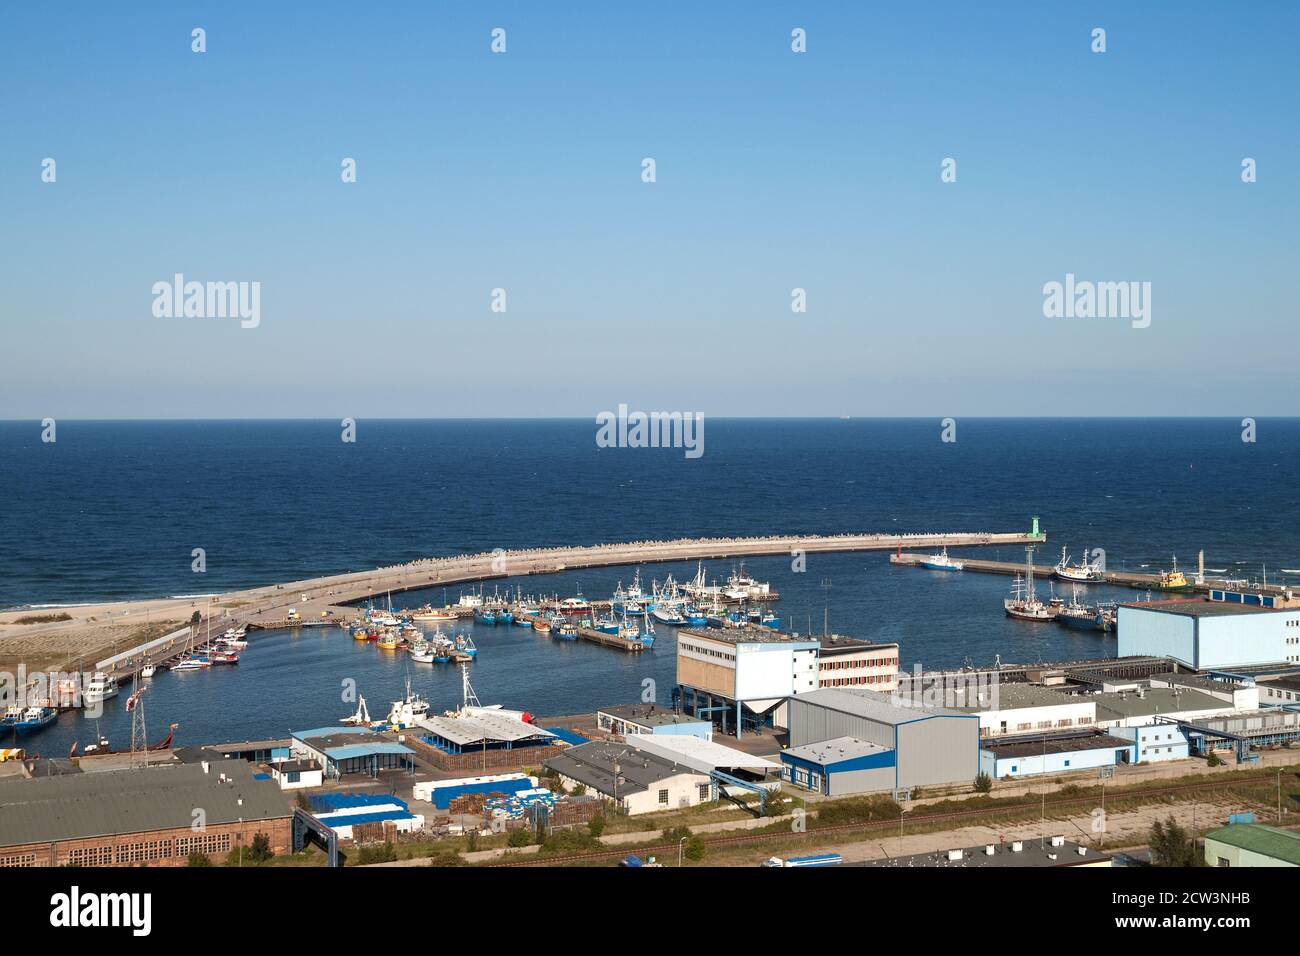 The fishermens port of Wladyslawowo aerial view, Poland Stock Photo